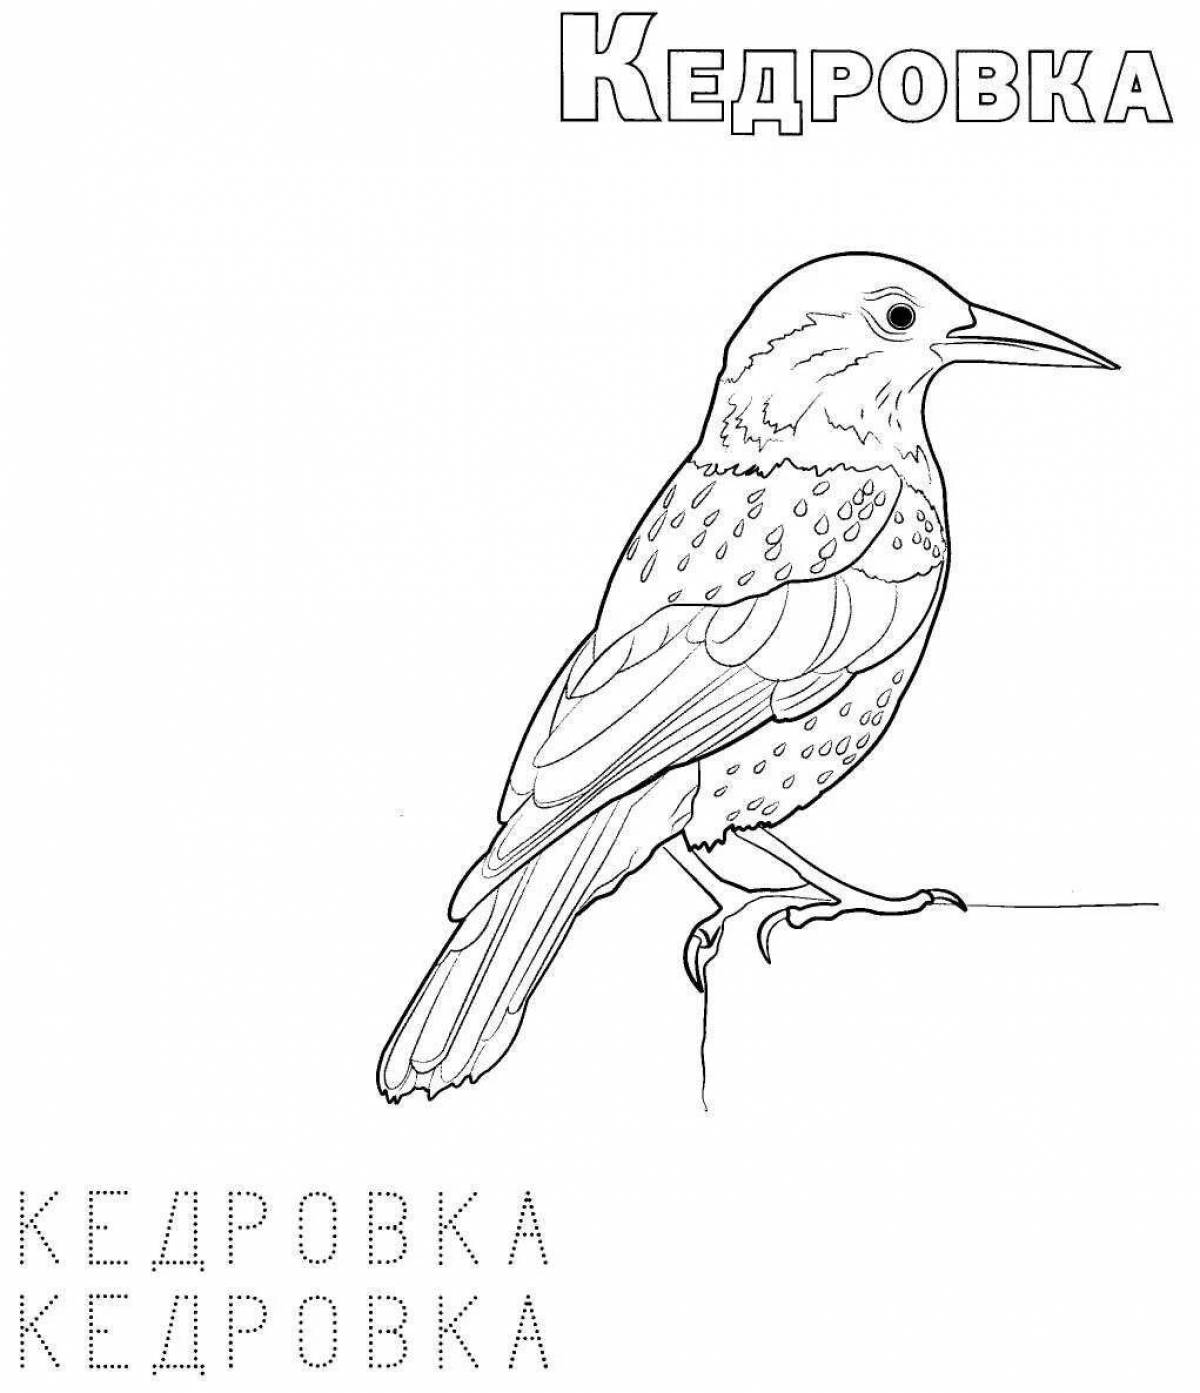 Delightful russian bird coloring book